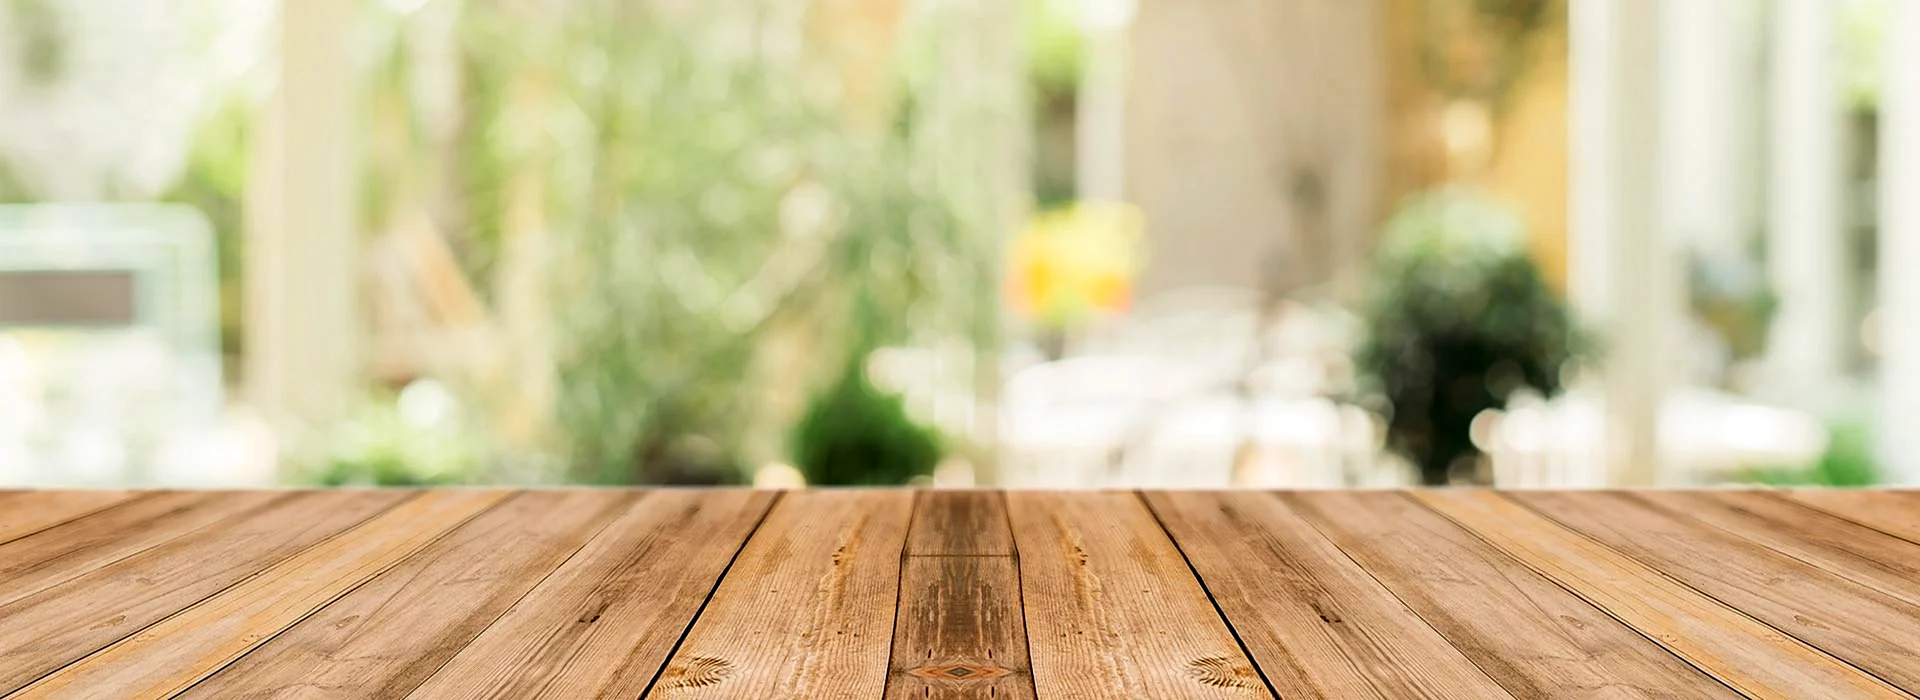 Деревянный стол фон